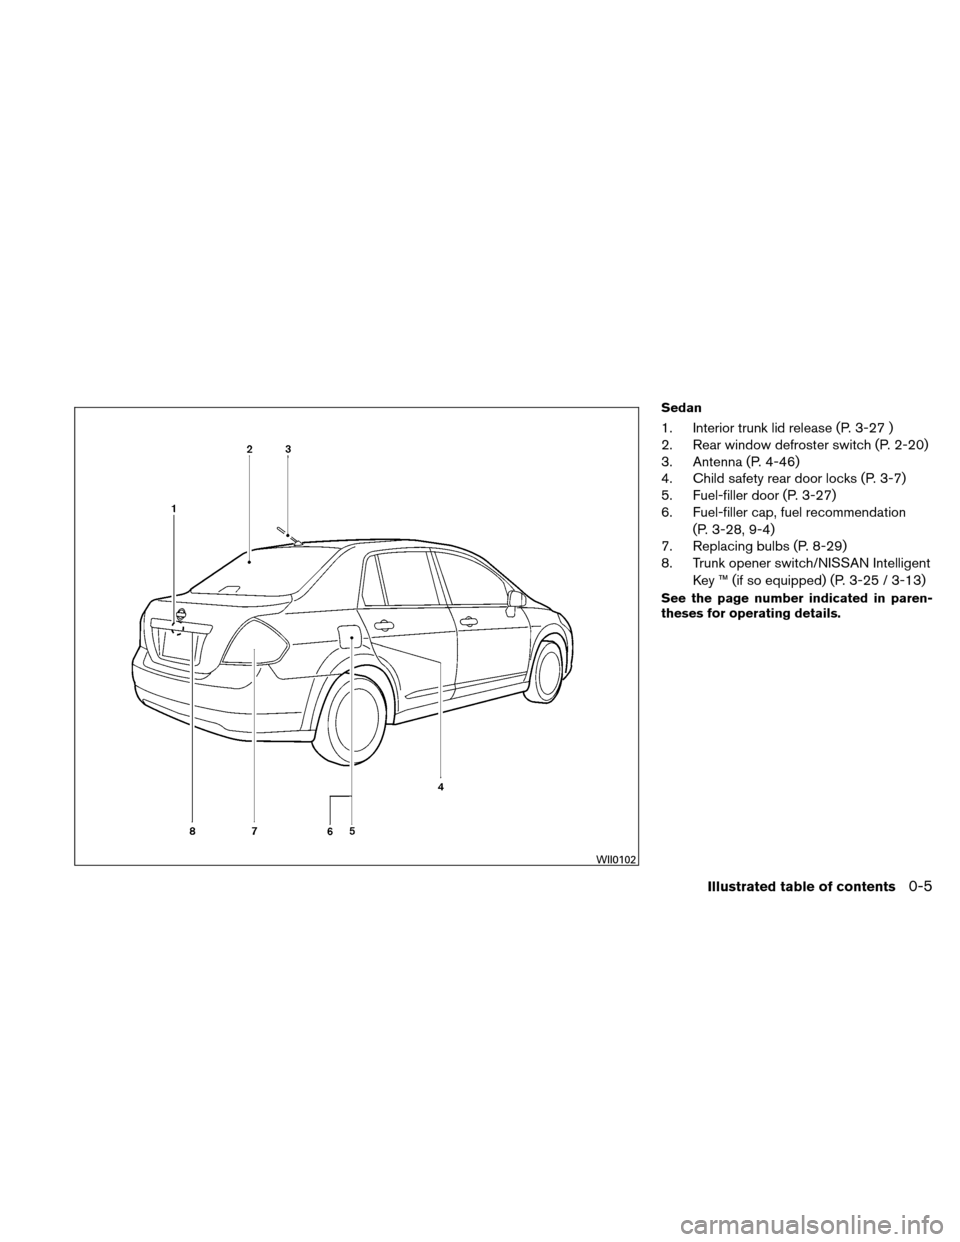 NISSAN VERSA HATCHBACK 2010 1.G User Guide Sedan
1. Interior trunk lid release (P. 3-27 )
2. Rear window defroster switch (P. 2-20)
3. Antenna (P. 4-46)
4. Child safety rear door locks (P. 3-7)
5. Fuel-filler door (P. 3-27)
6. Fuel-filler cap,